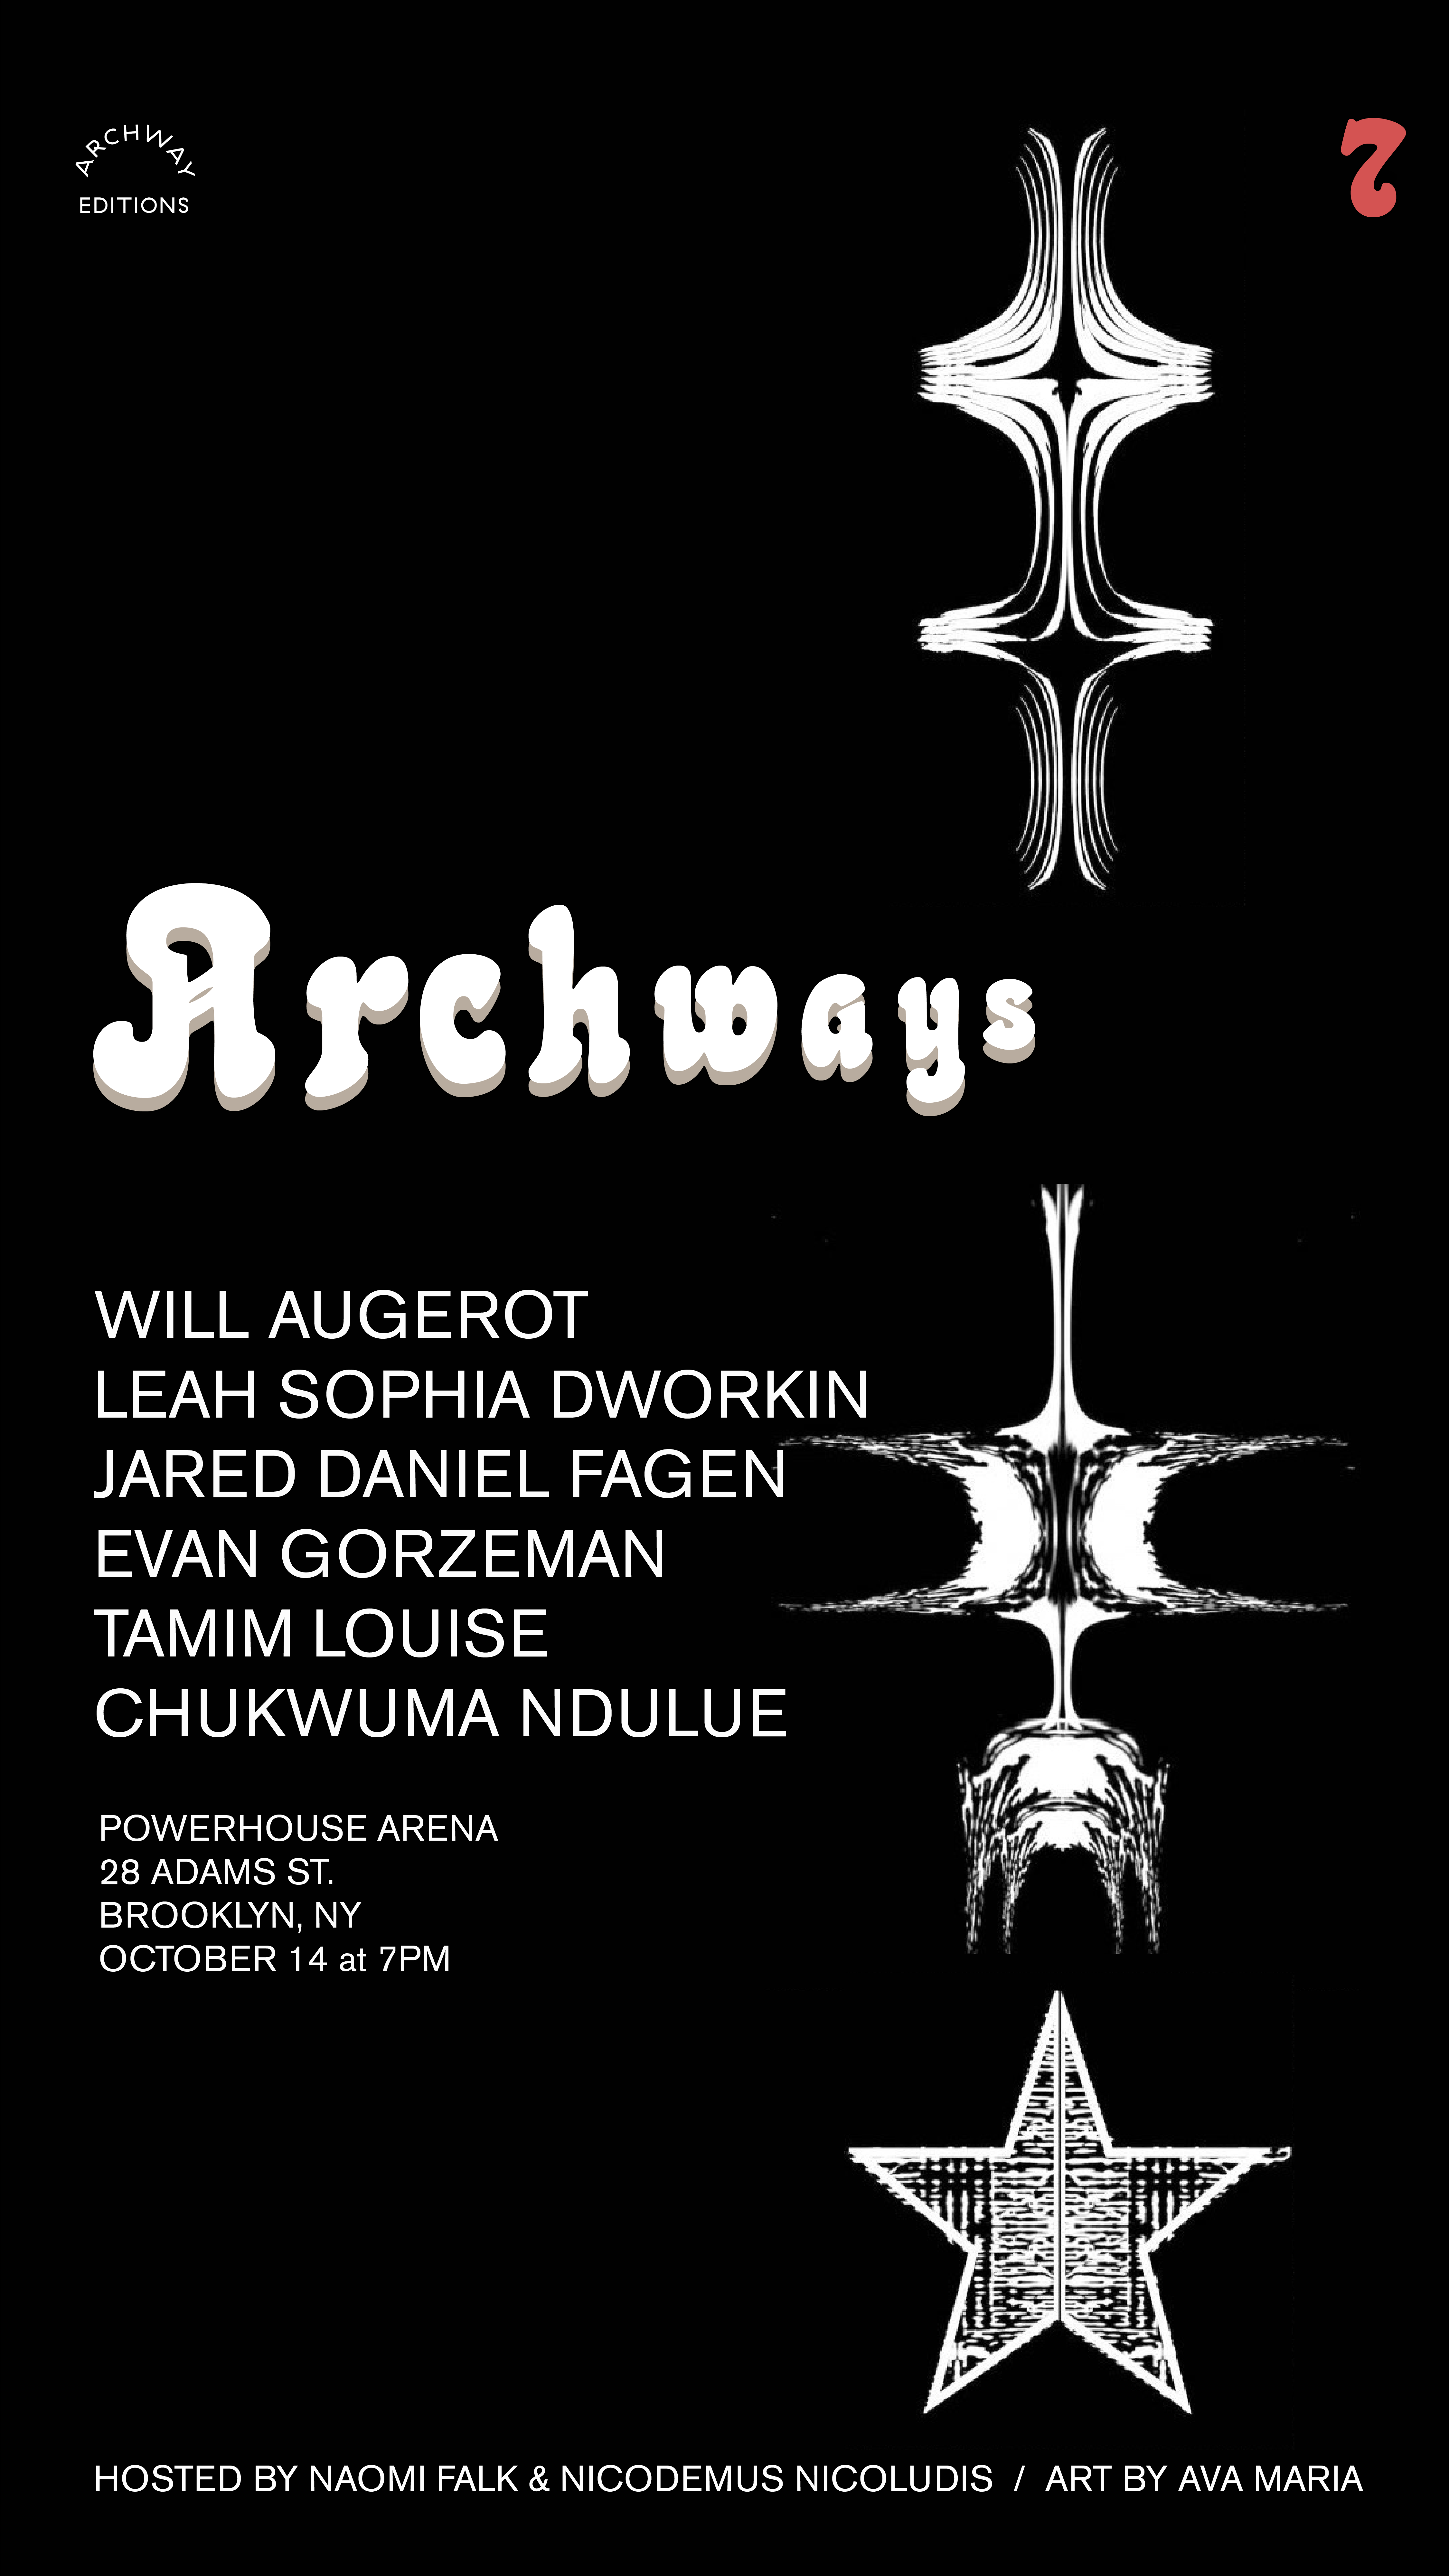 Archways 7 featuring Will Augerot, Leah Sophia Dworkin, Jared Daniel Fagen, Evan Gorzeman, Tamim Louise & Chukwuma Ndulue